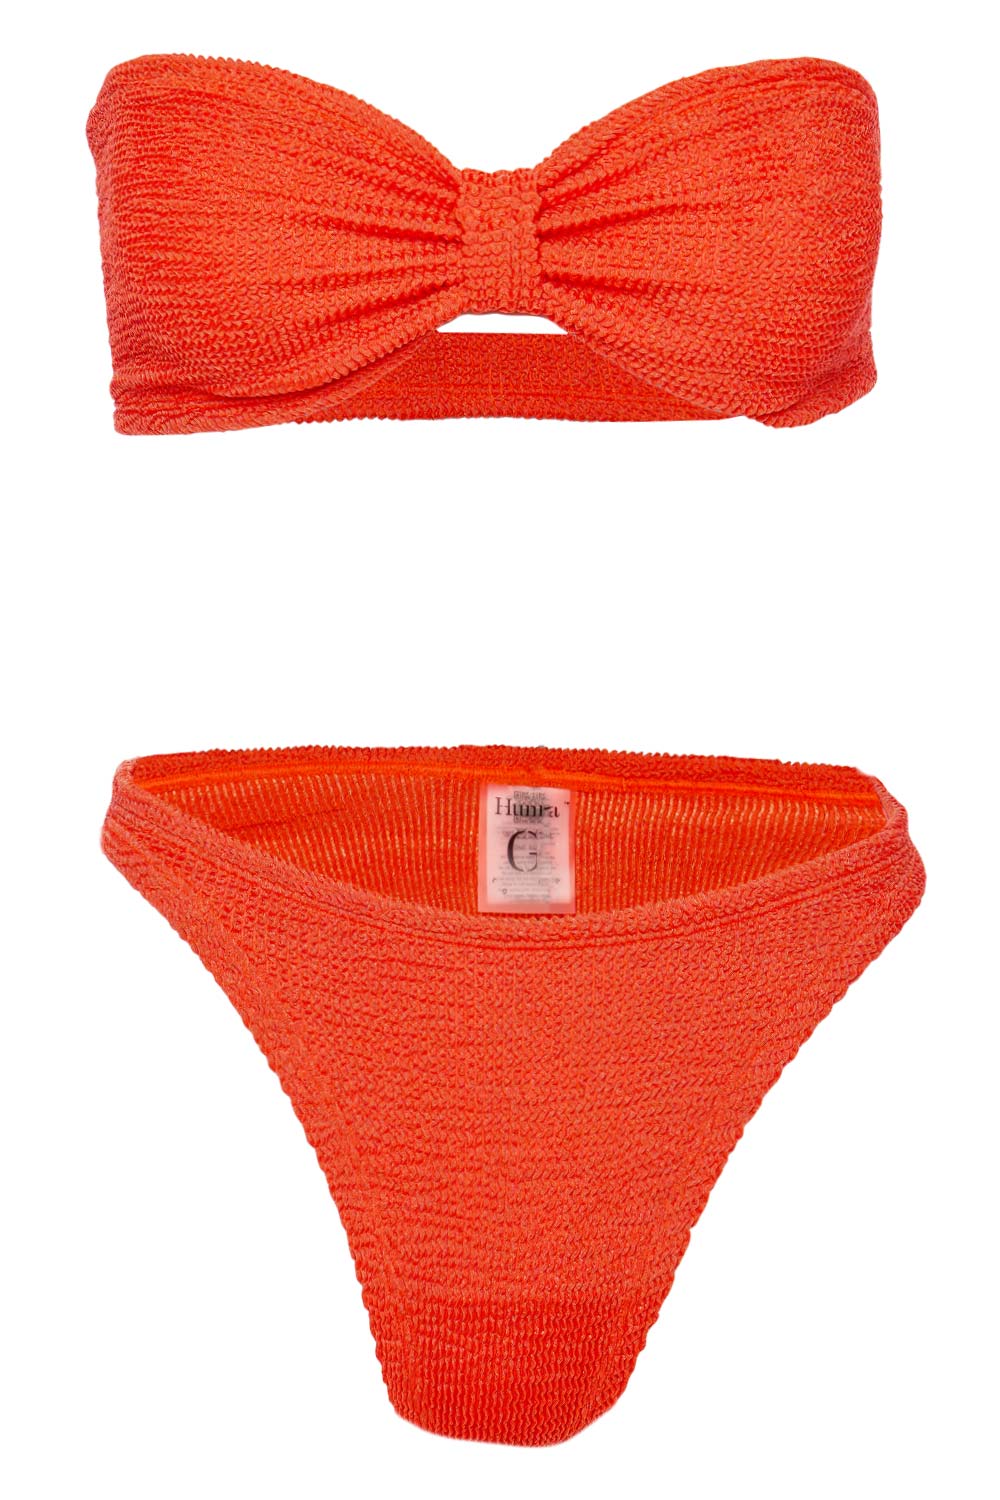 Hunza G Jean Tangerine Bandeau Bikini Set